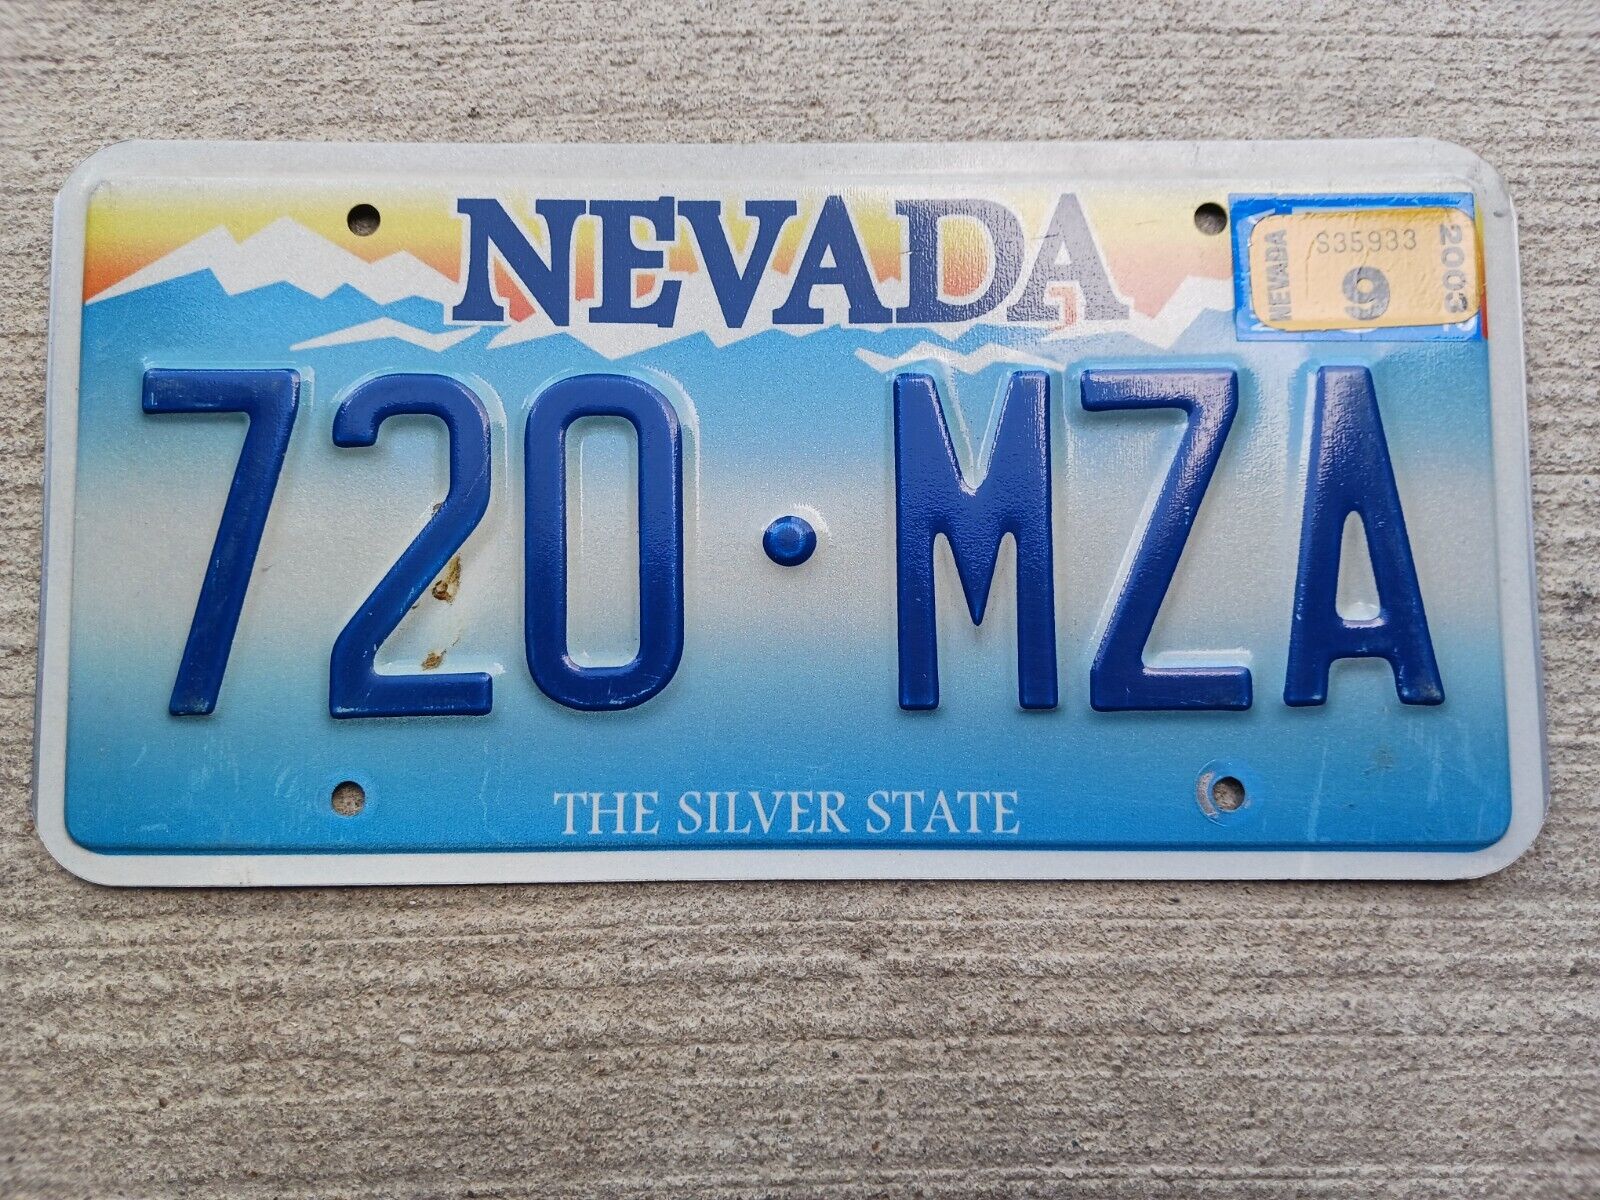 2003 Nevada NV License Plate 720 MZA with Sticker